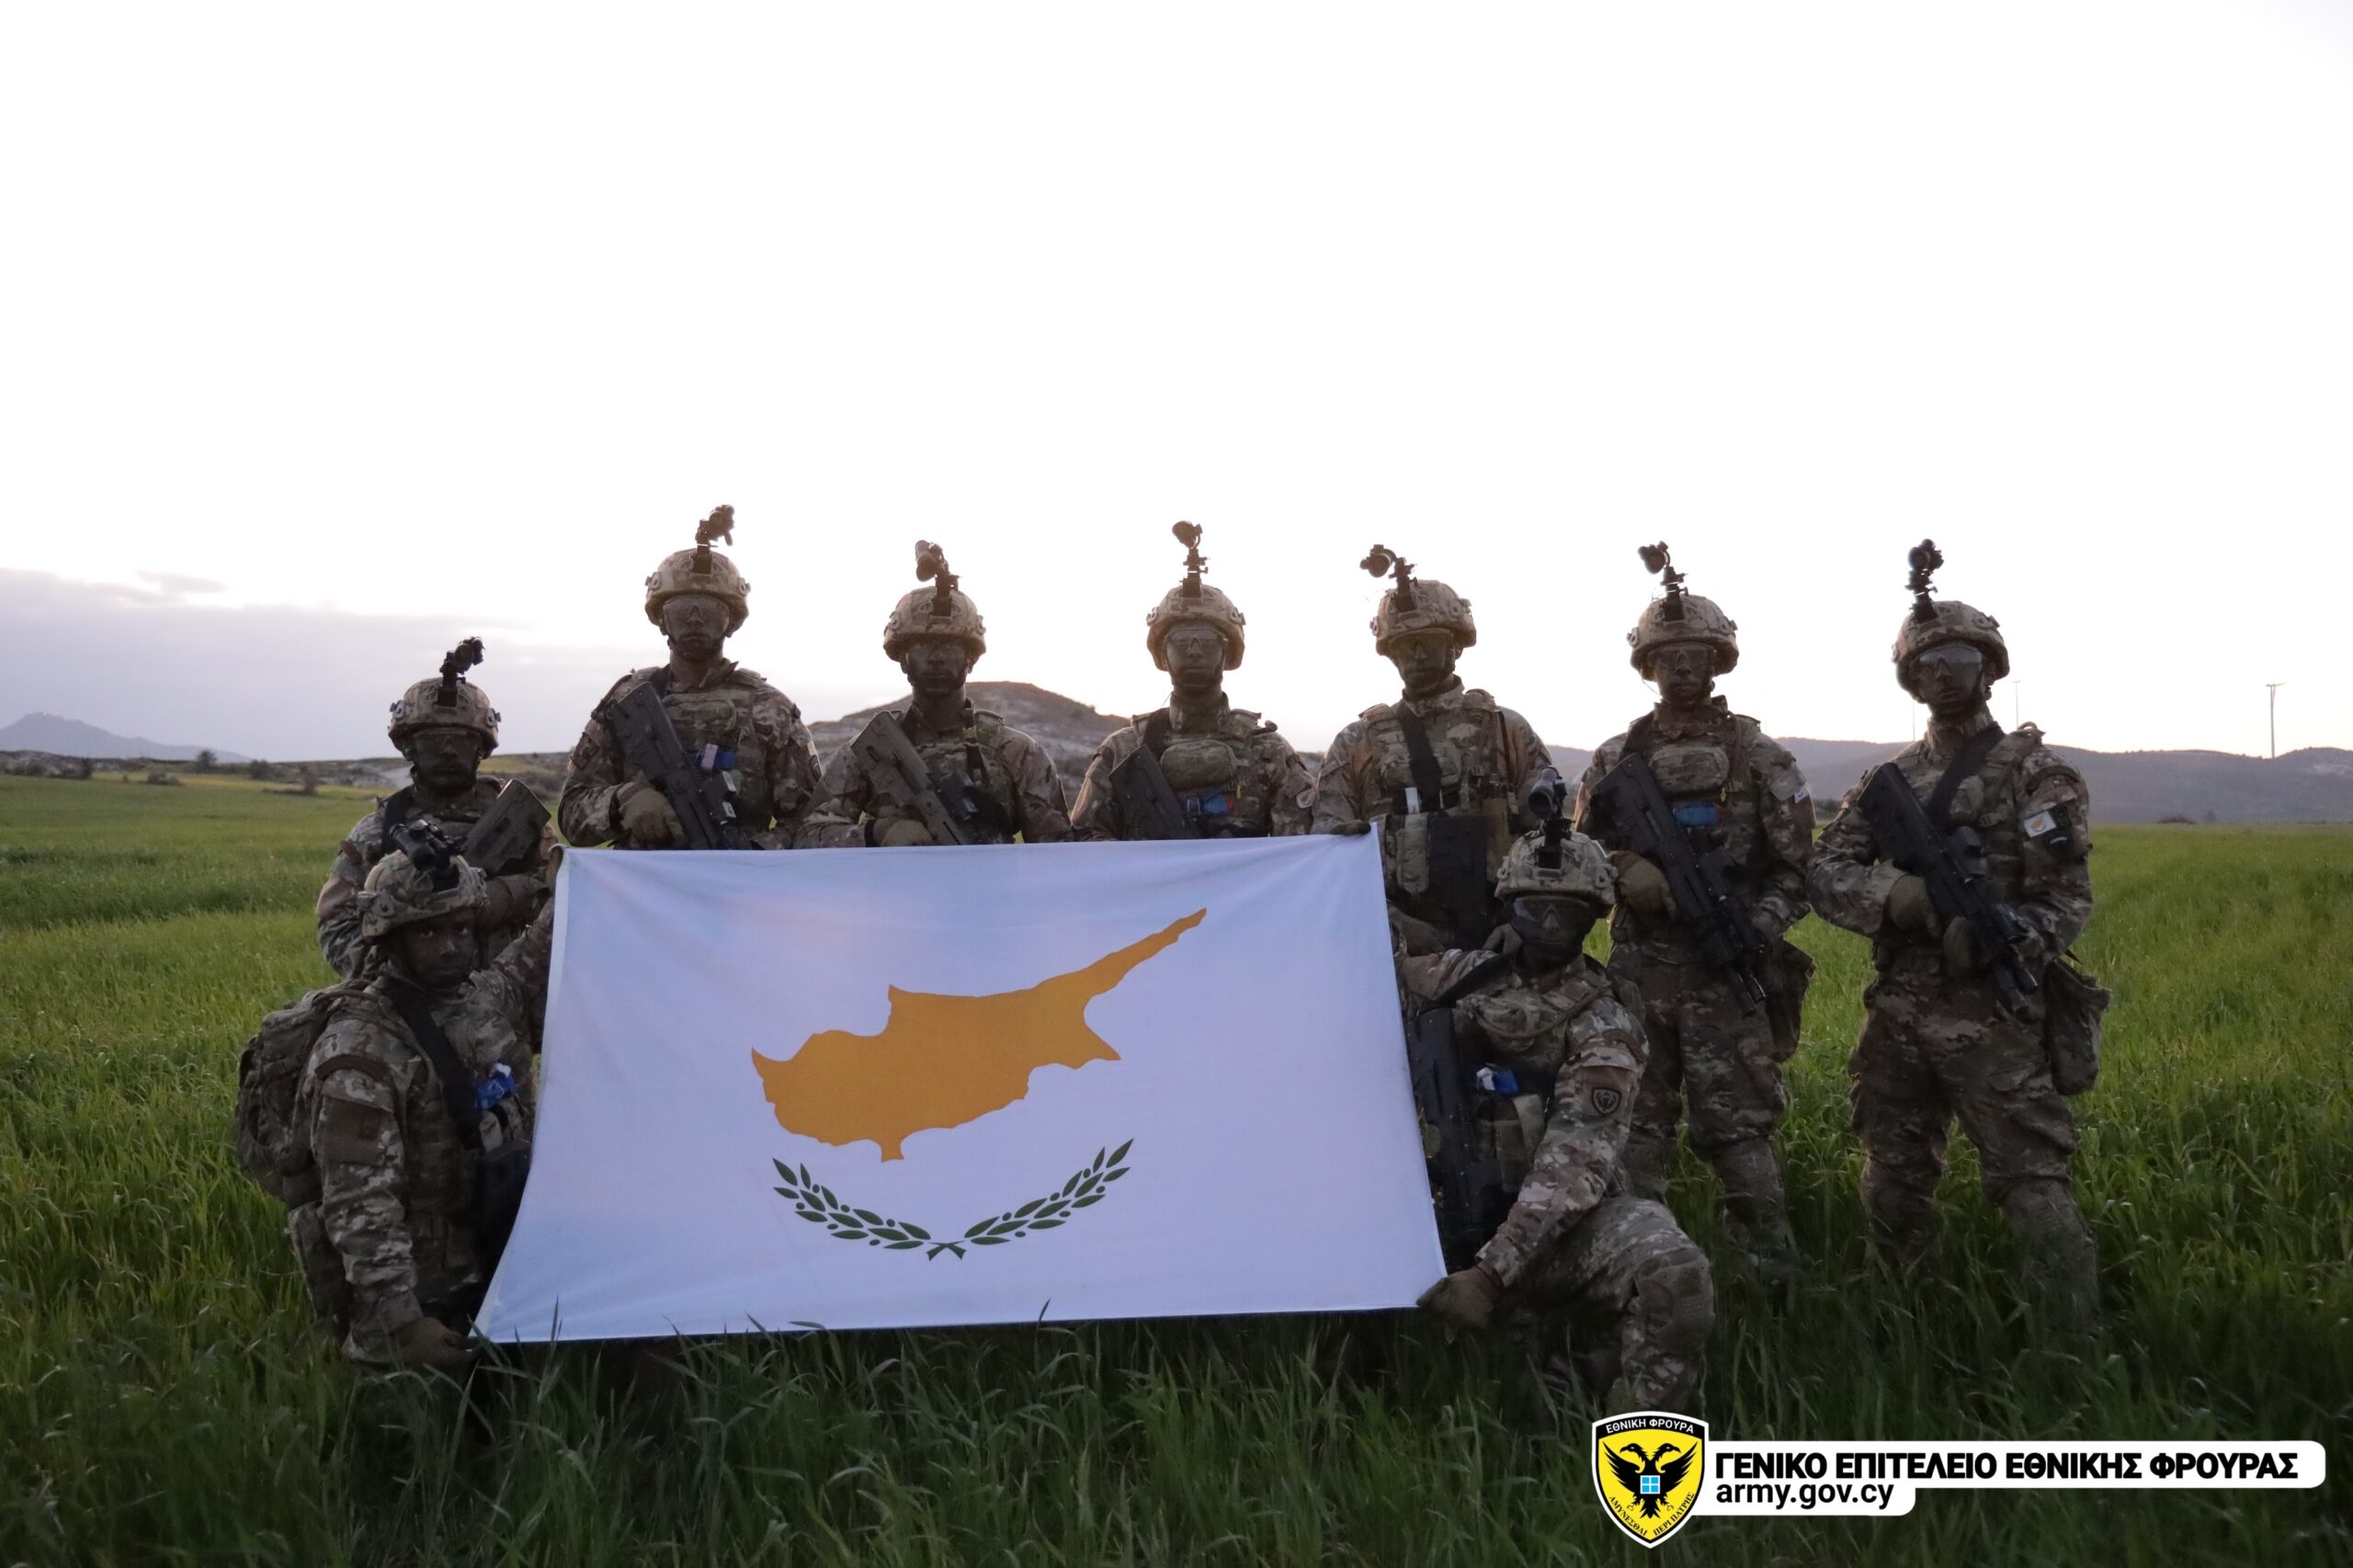 Kύπρος: Συνεκπαίδευση Εθνικής Φρουράς και Ενόπλων Δυνάμεων των ΗΠΑ